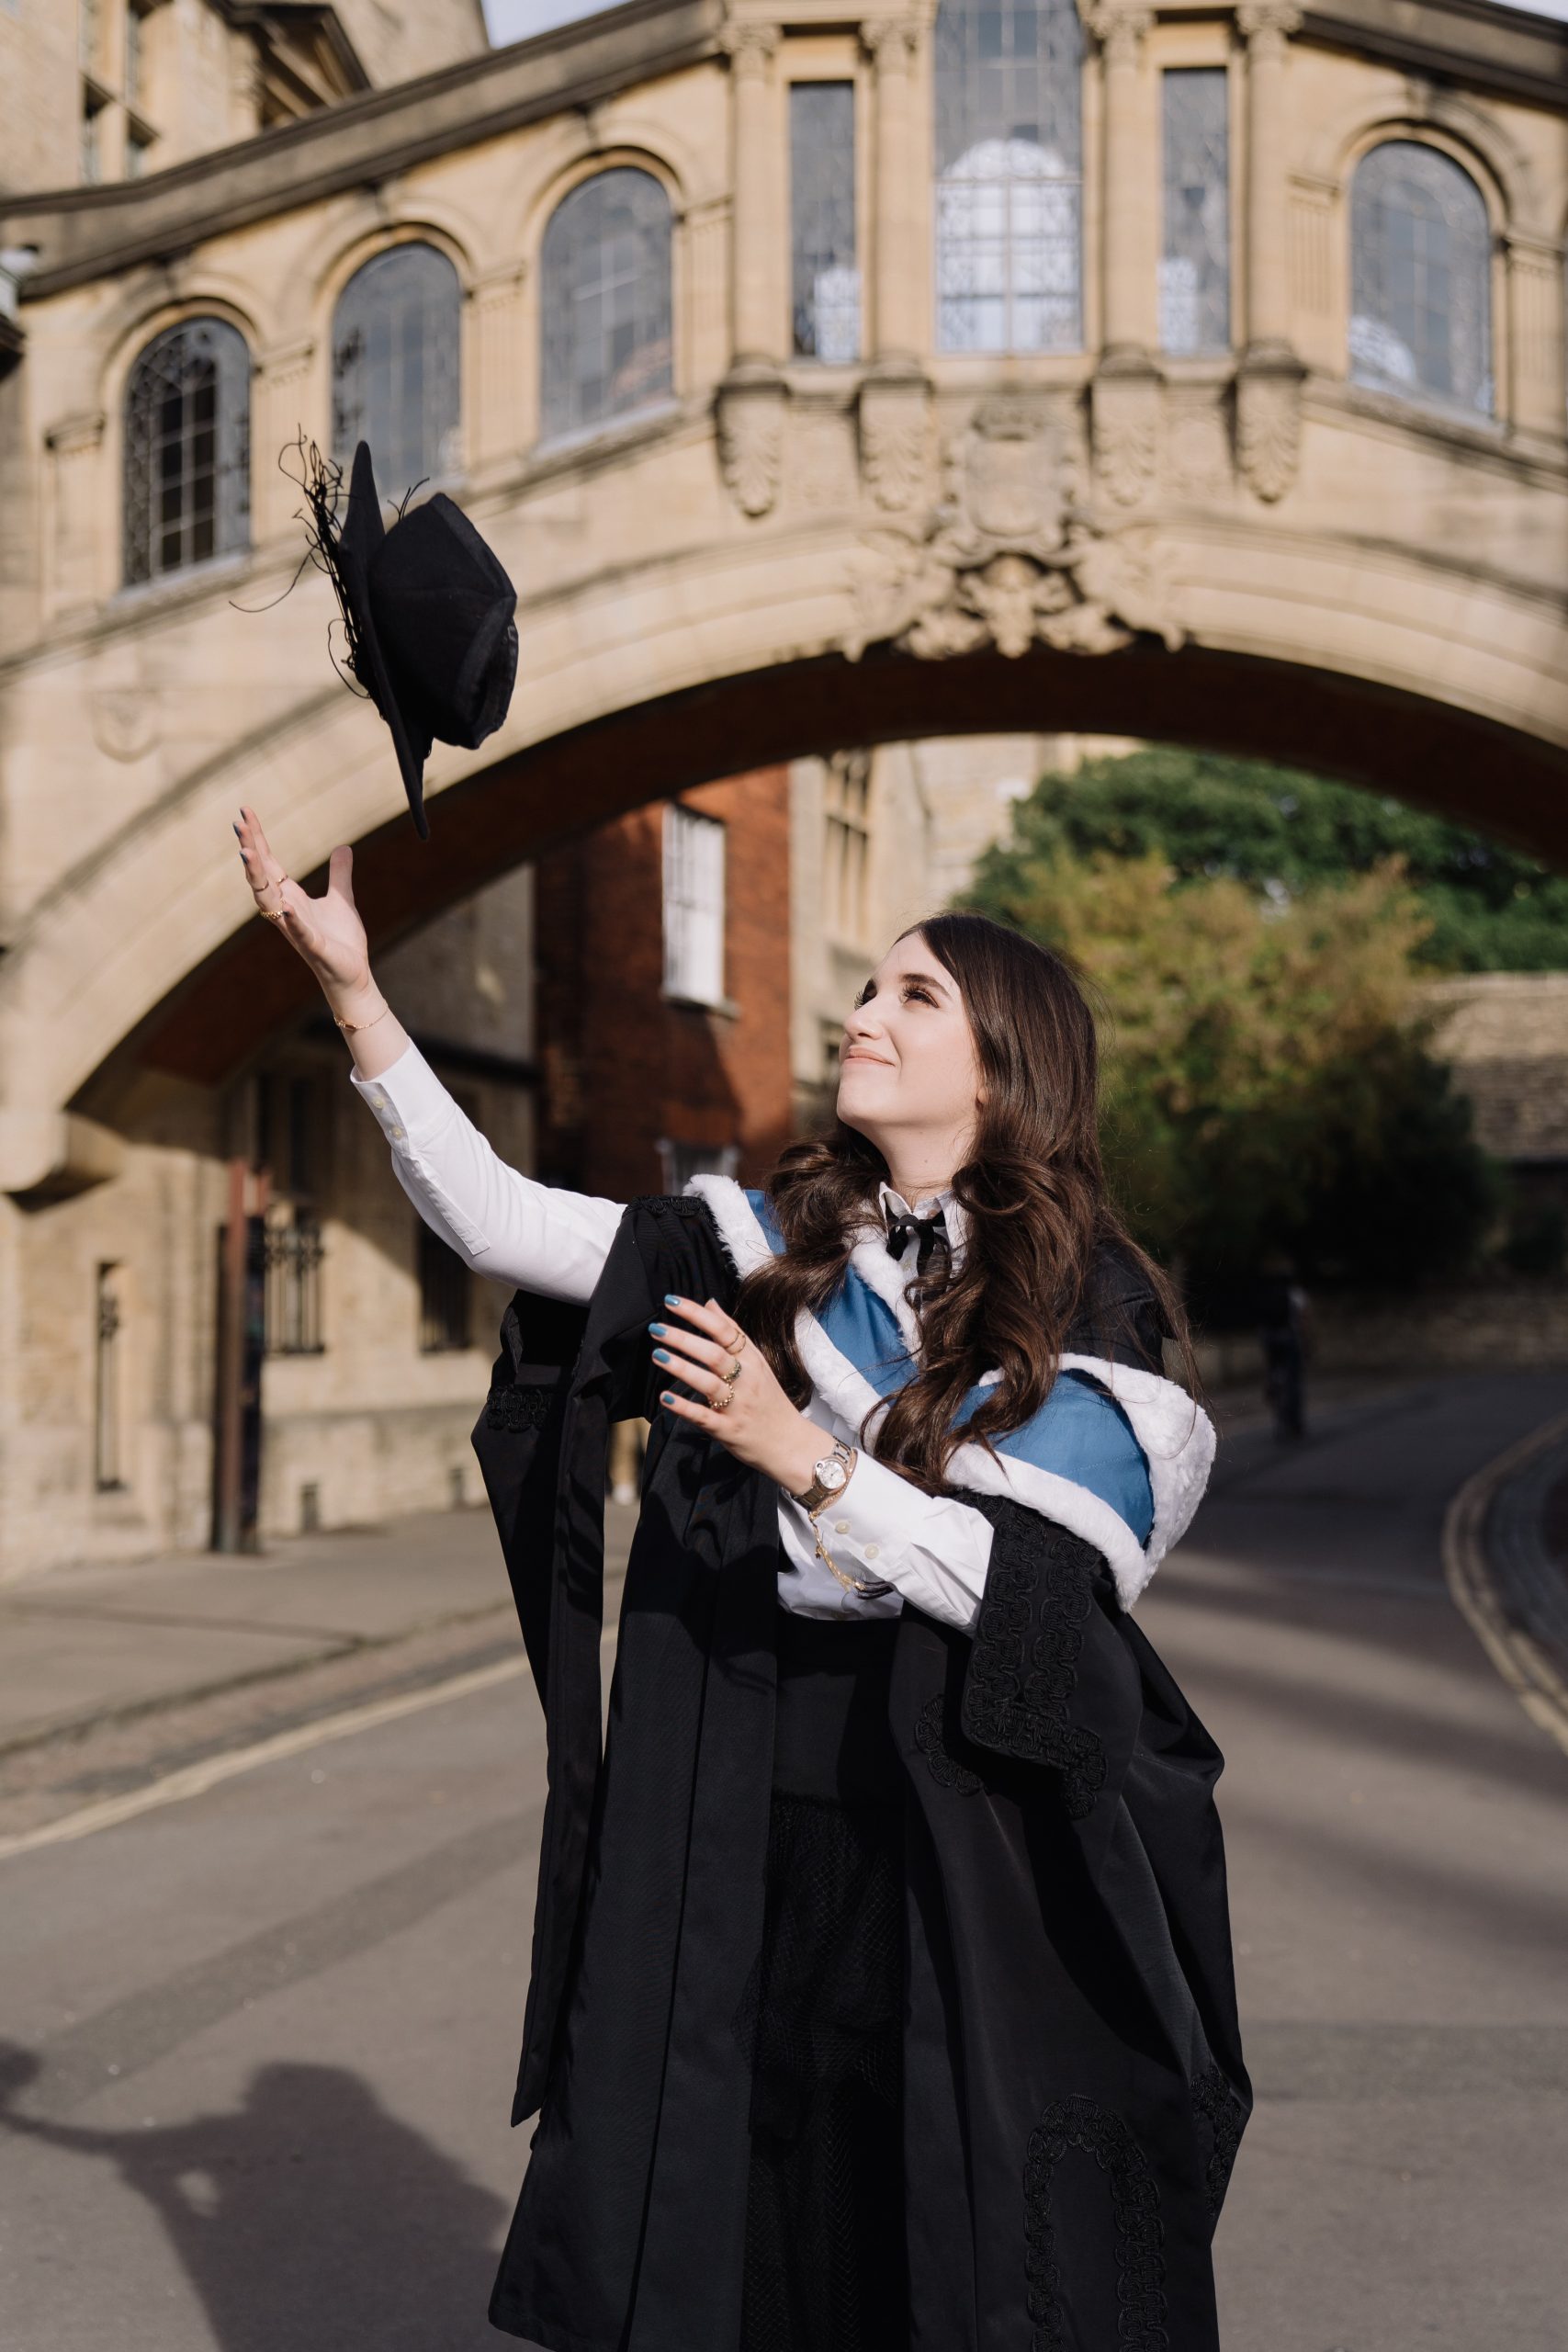 Anna throwing graduation hat